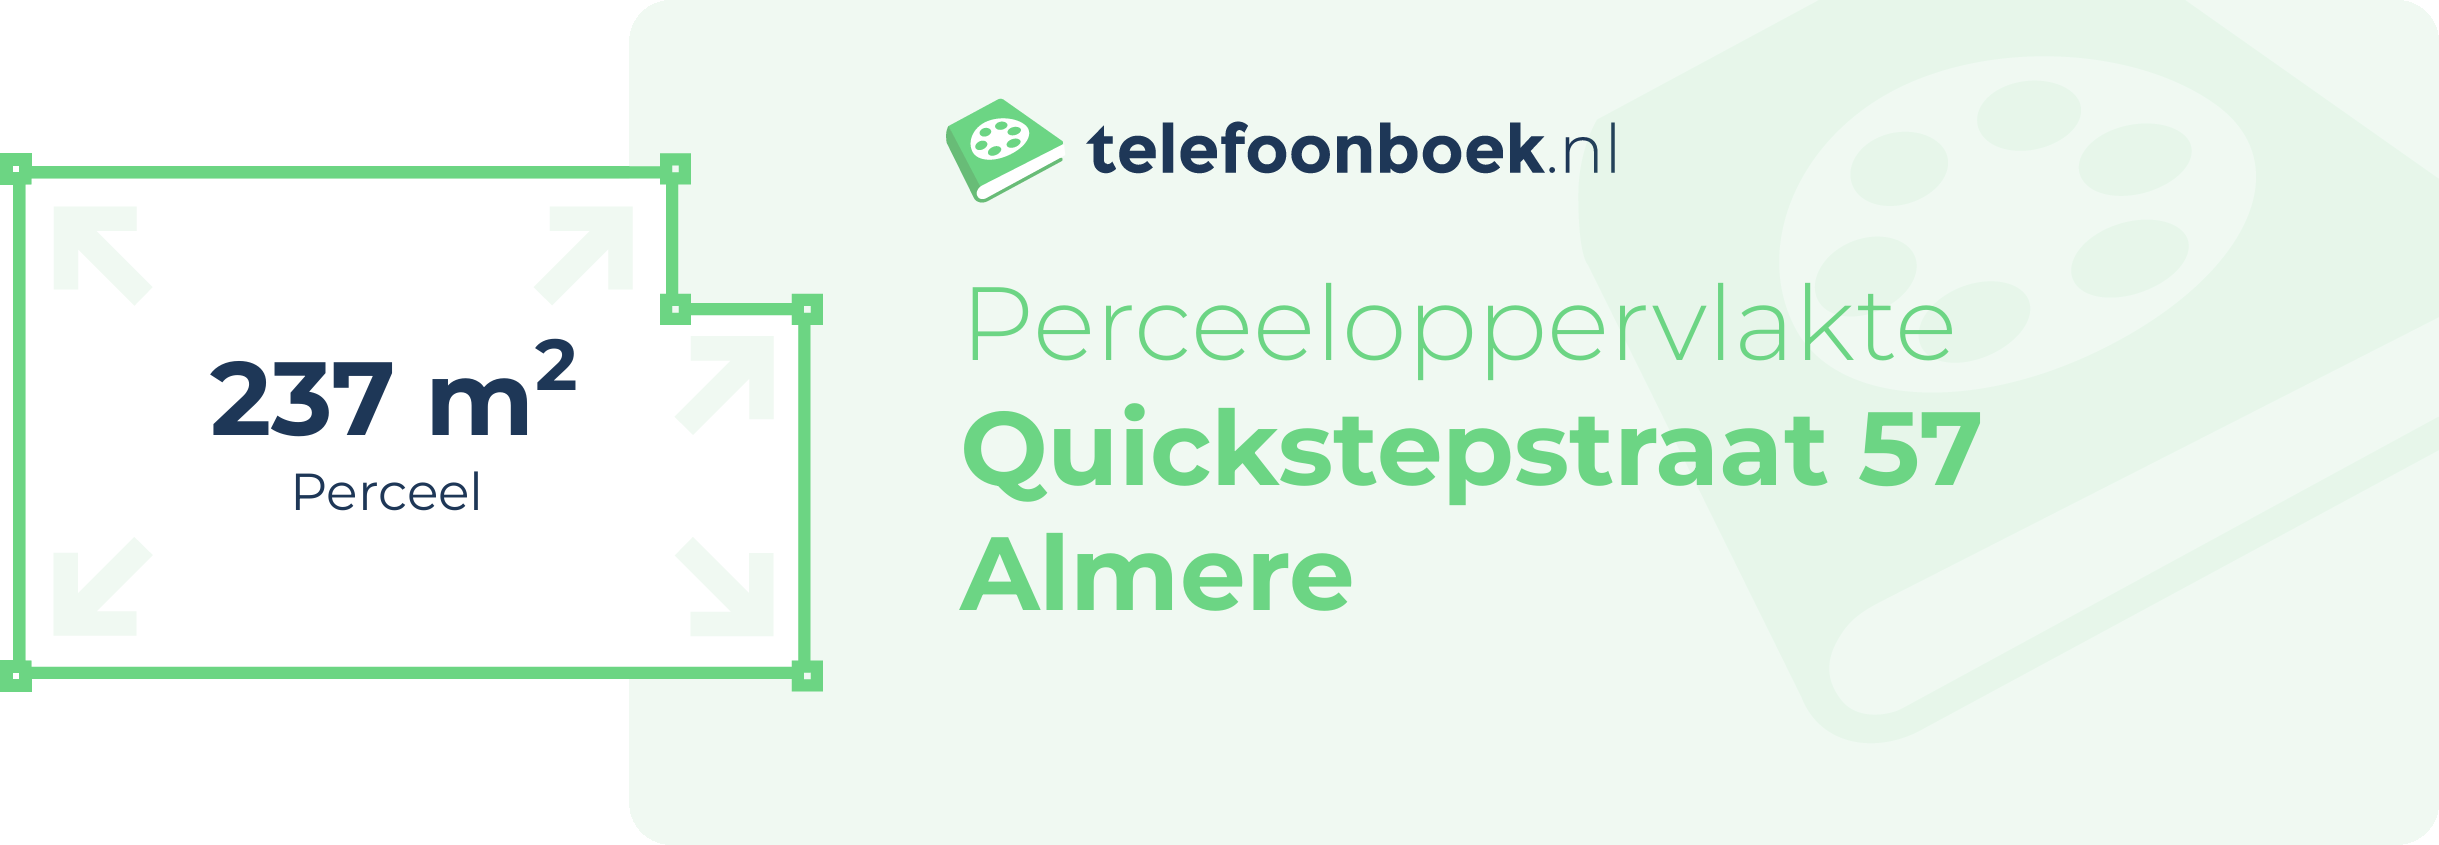 Perceeloppervlakte Quickstepstraat 57 Almere